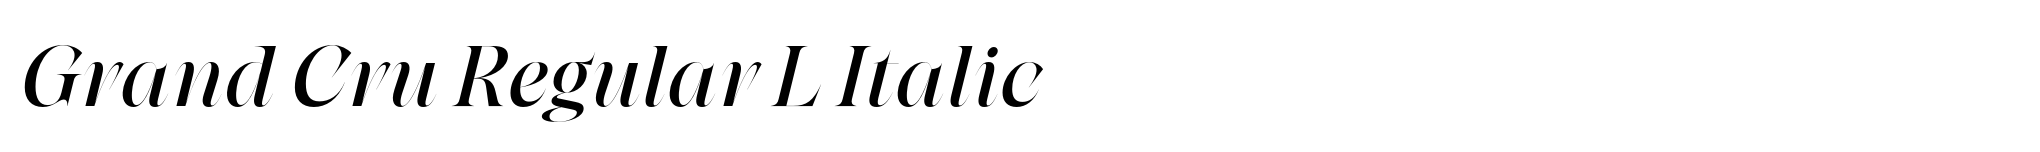 Grand Cru Regular L Italic image